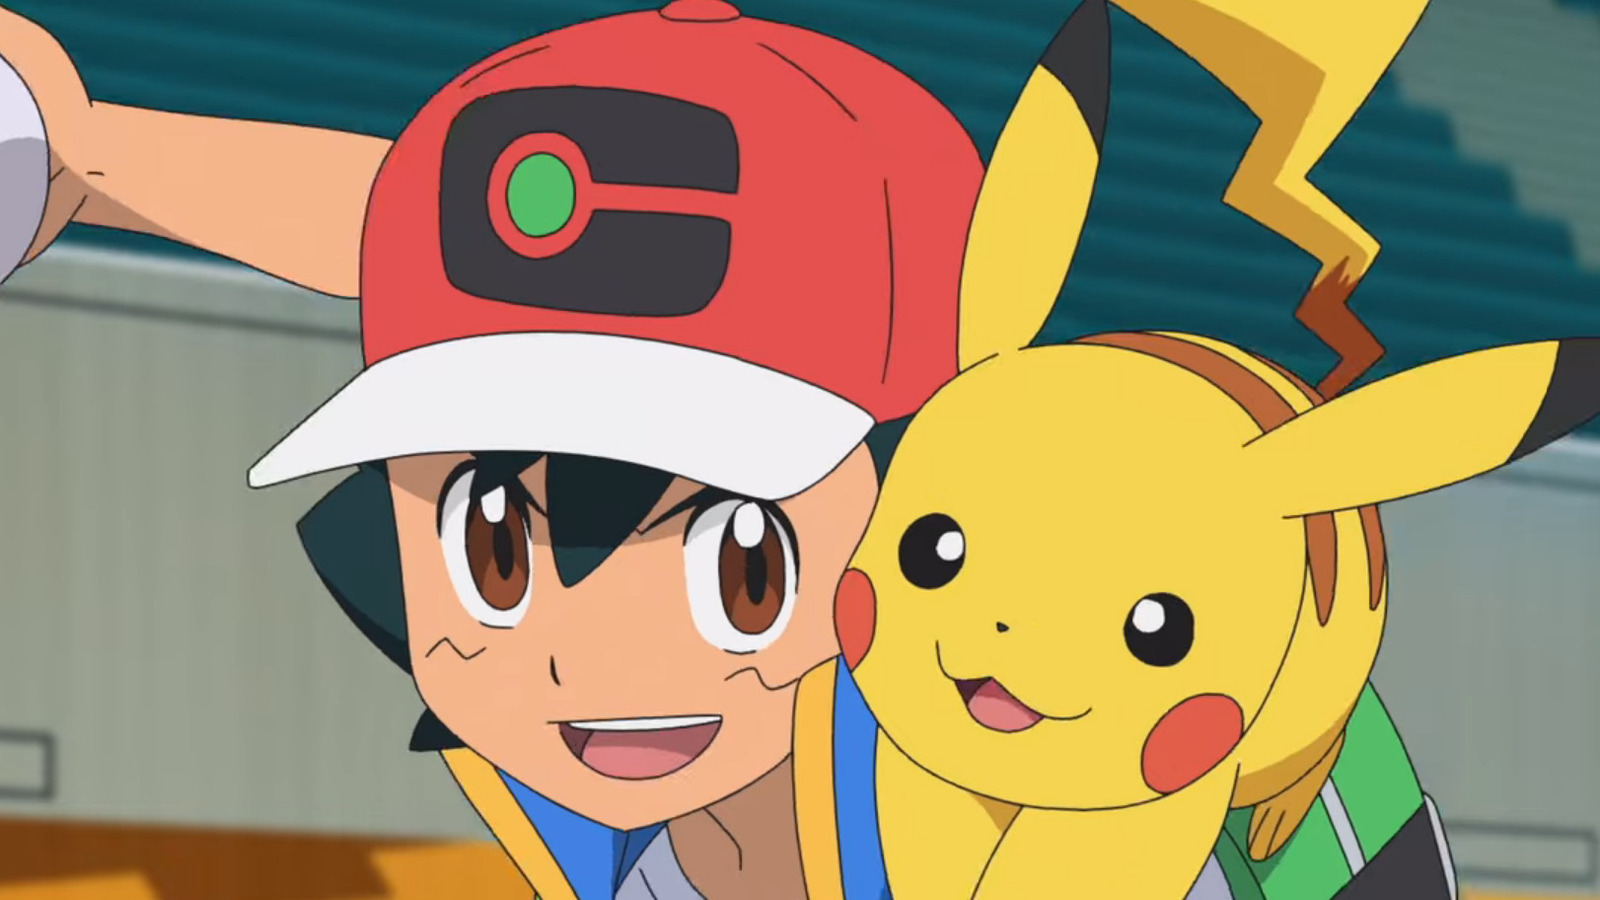 Pokemon Pikachu and Pokemon Trainer Ash Use the Kalos Pokedex and